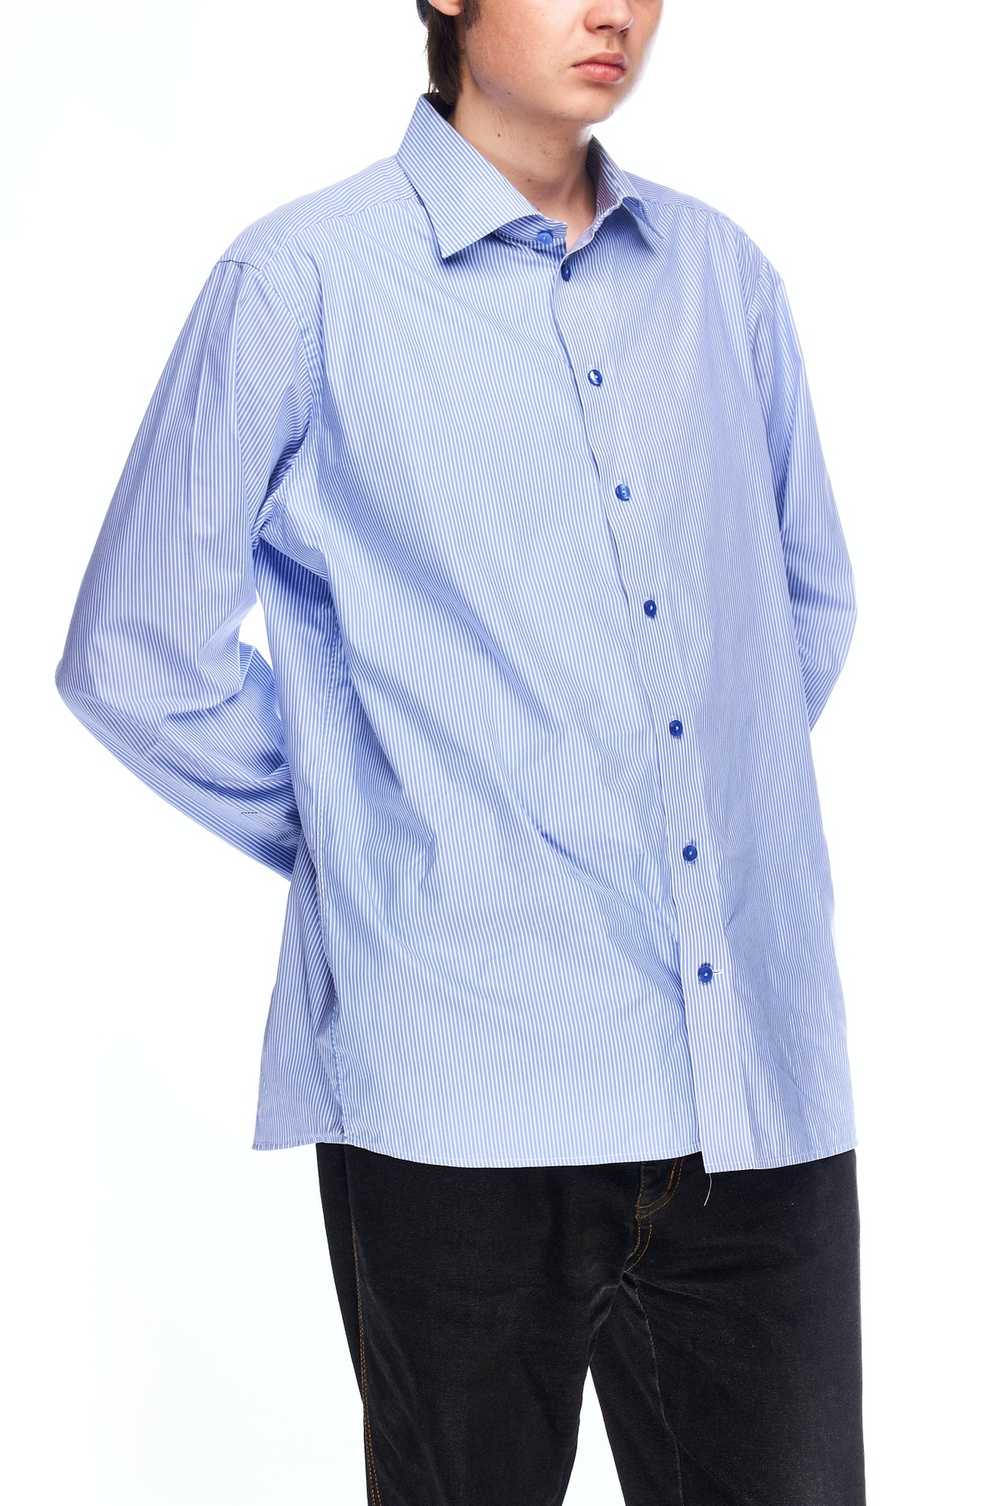 Eton Eton Striped Shirt Size 44/17 - image 2